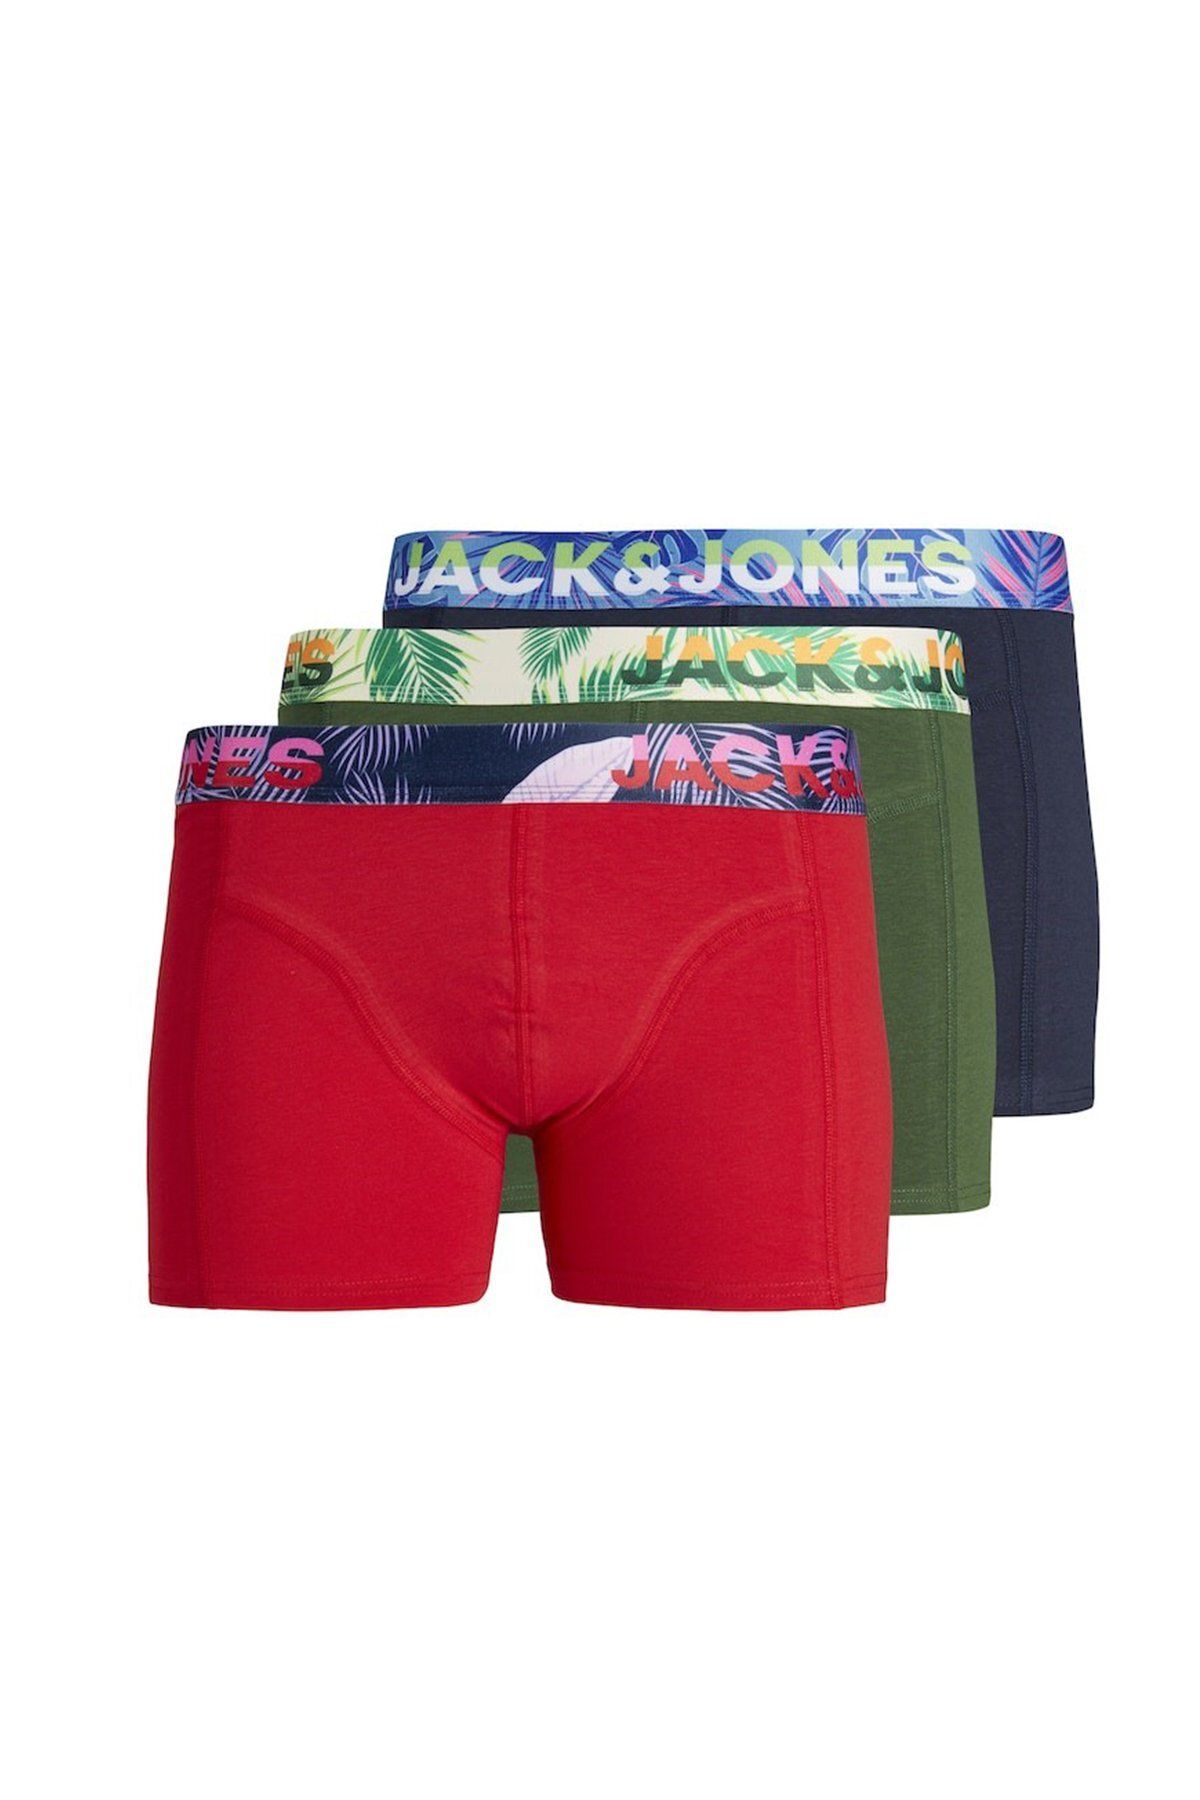 Jack & Jones Erkek Paw 3 Pack Boxer